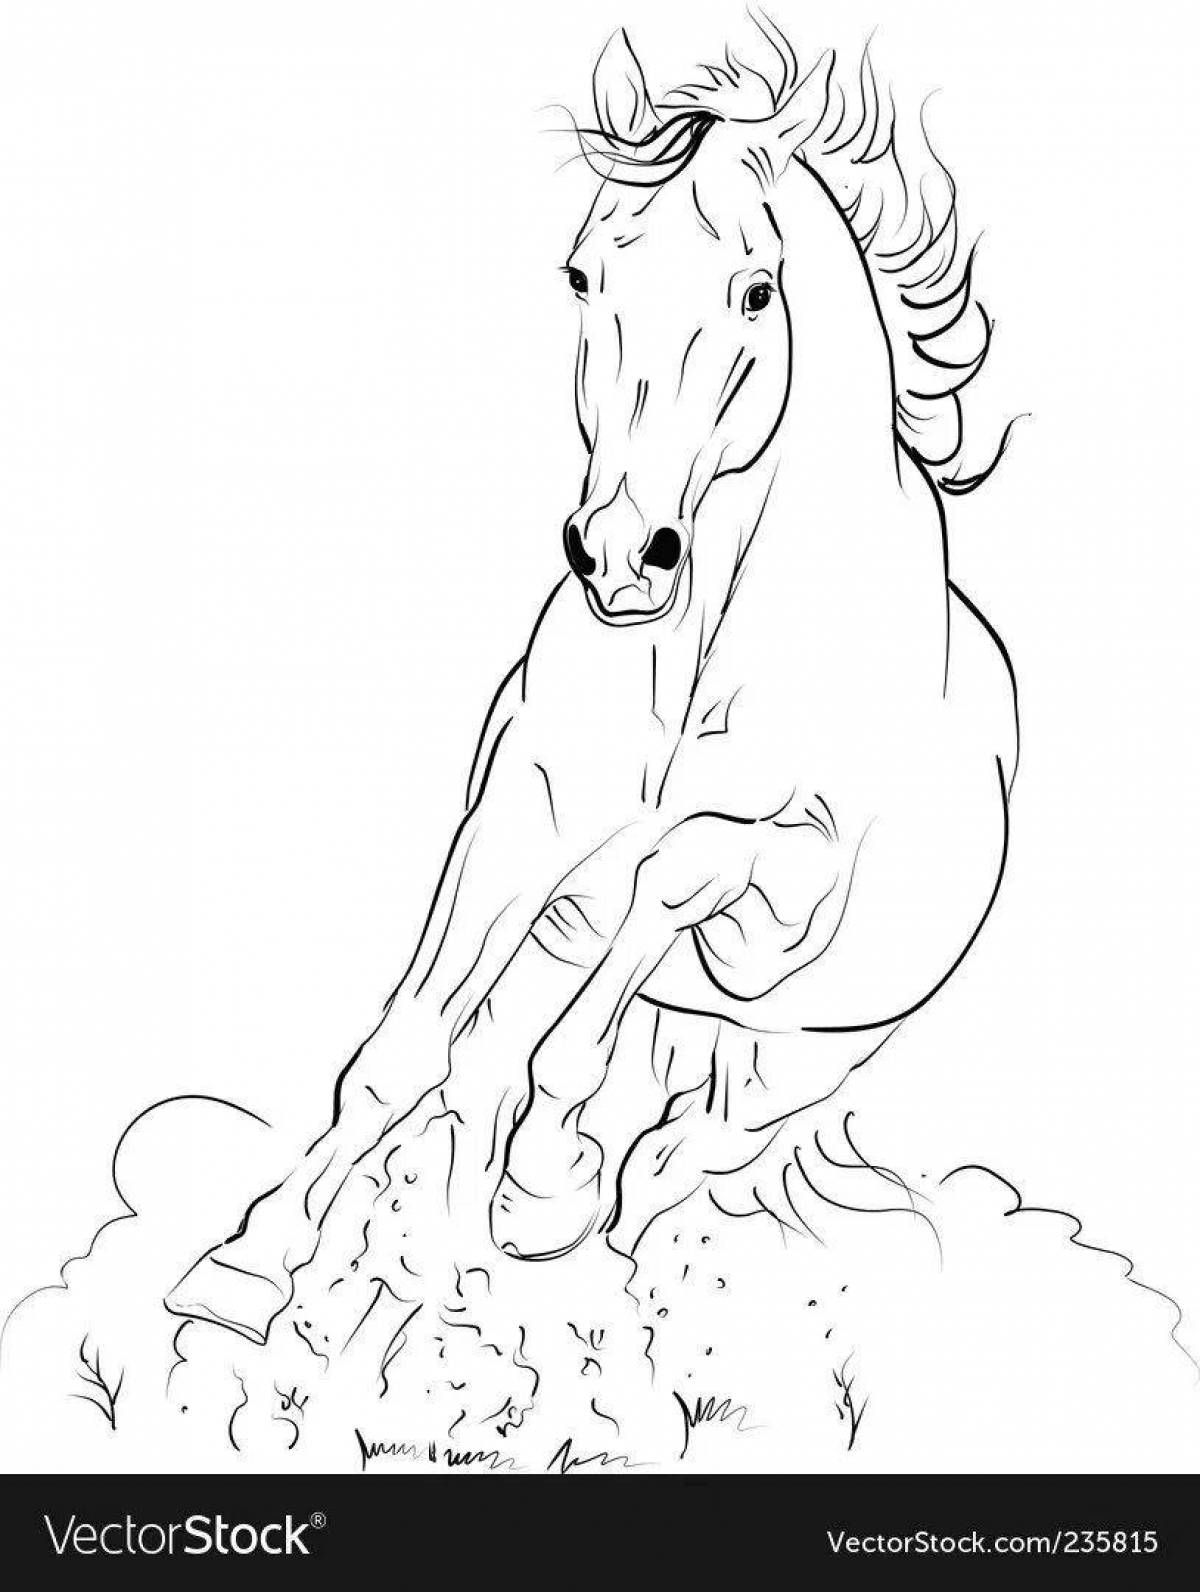 Coloring page elegant rearing horse